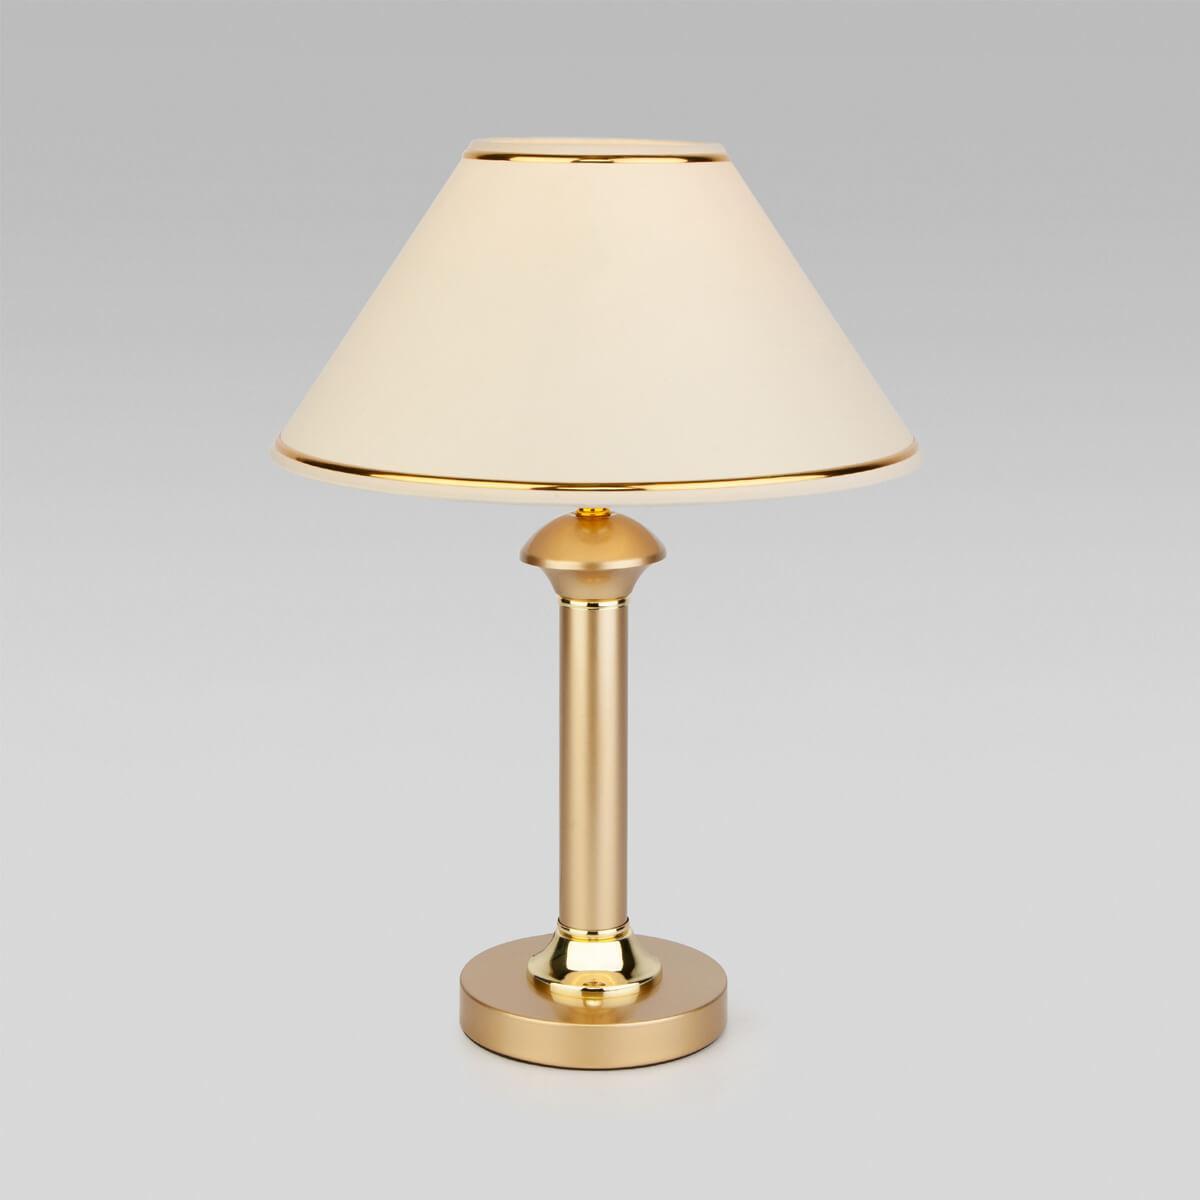 Настольная лампа Eurosvet Lorenzo 60019/1 перламутровое золото настольная лампа джина е14 40вт серо золотой 22х22х30 см